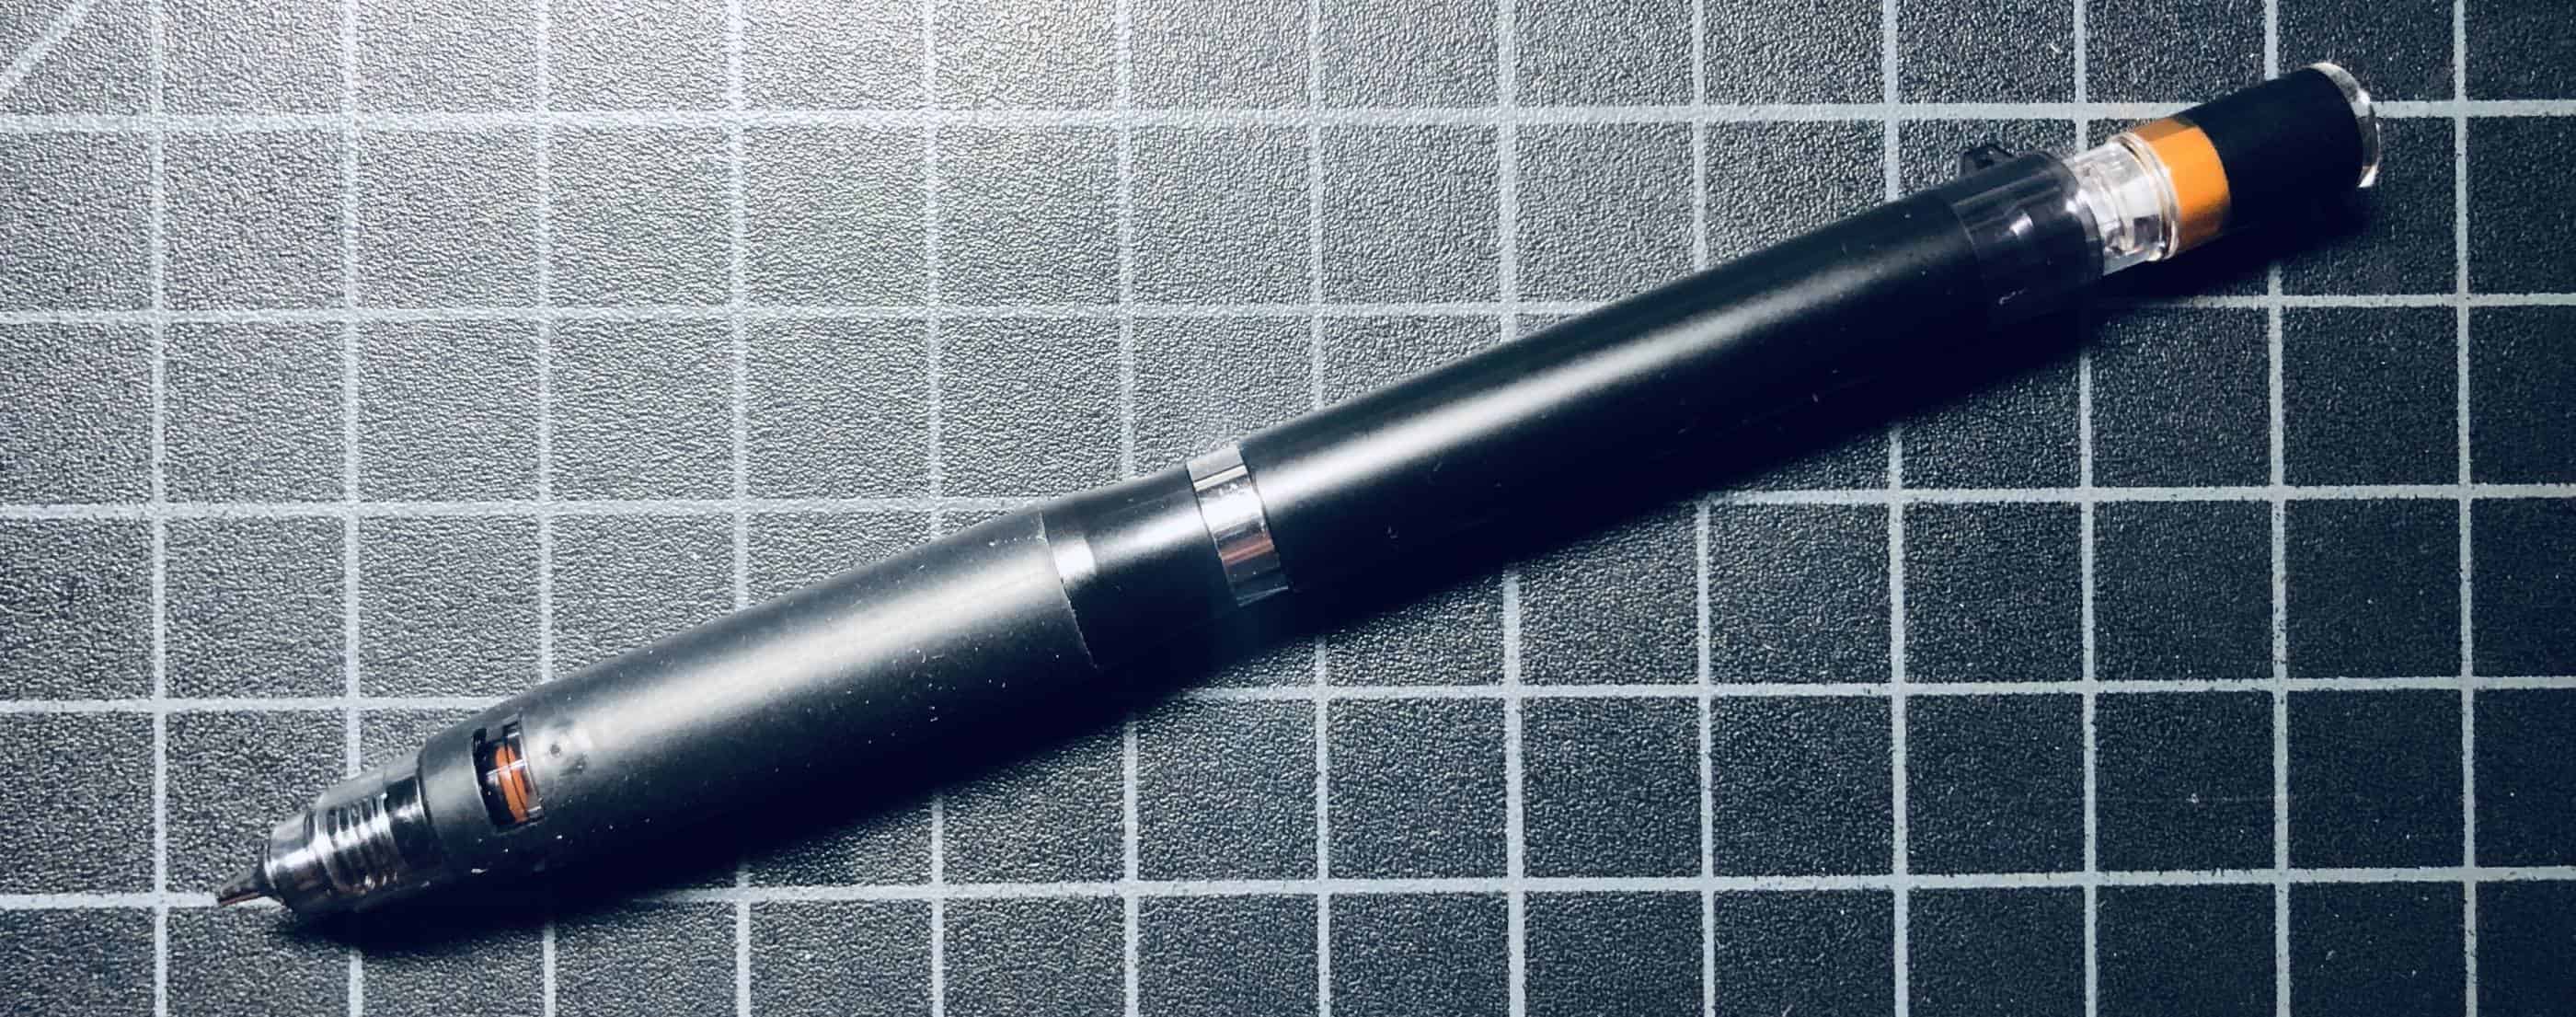 Zebra sharp pencil DelGuard type ER 0.5 black P-MA88-BK from Japan NEW 